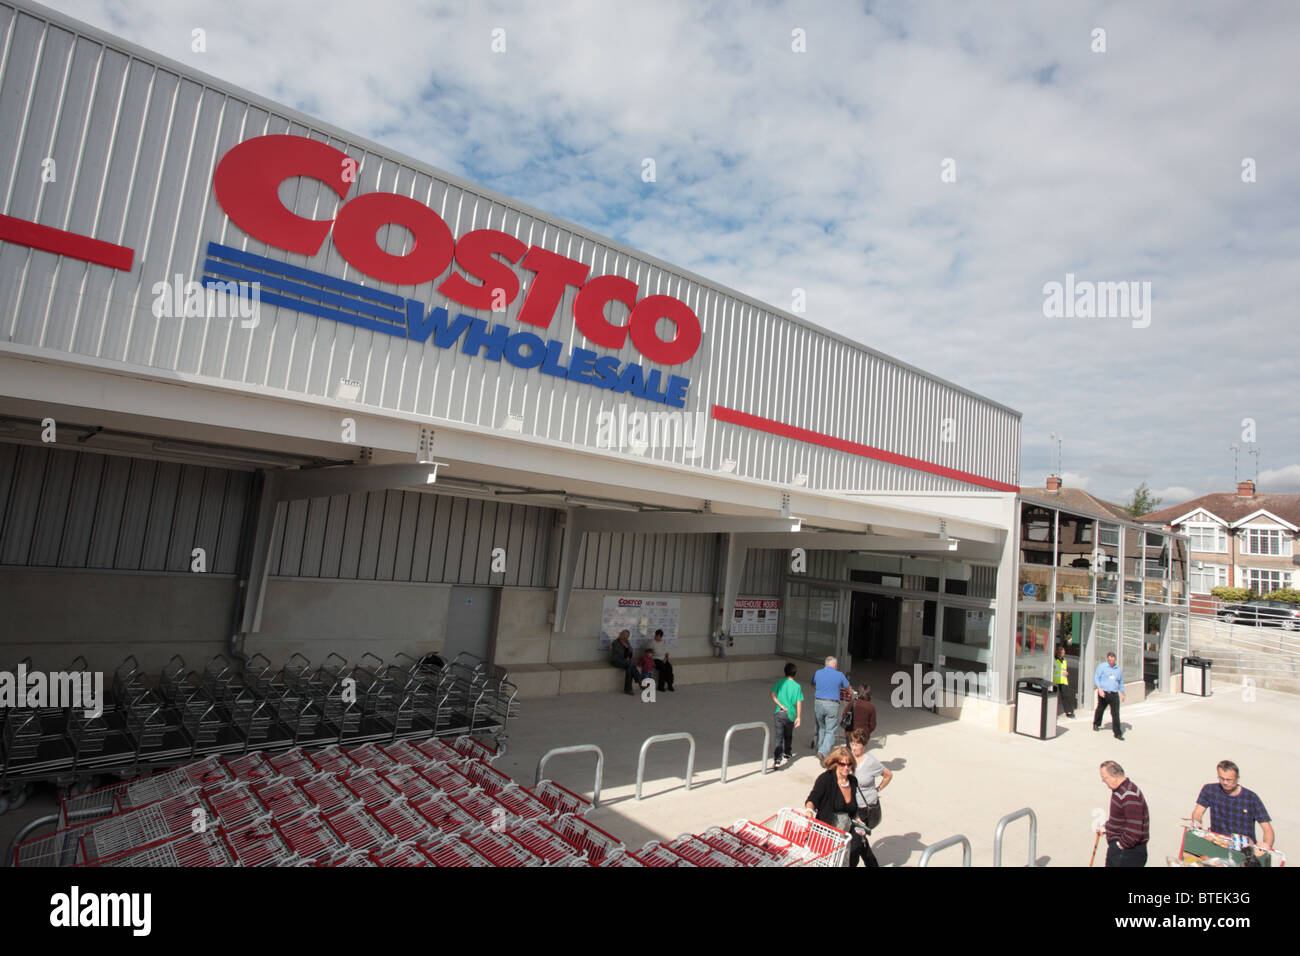 Costco Wholesale supermarket Stock Photo